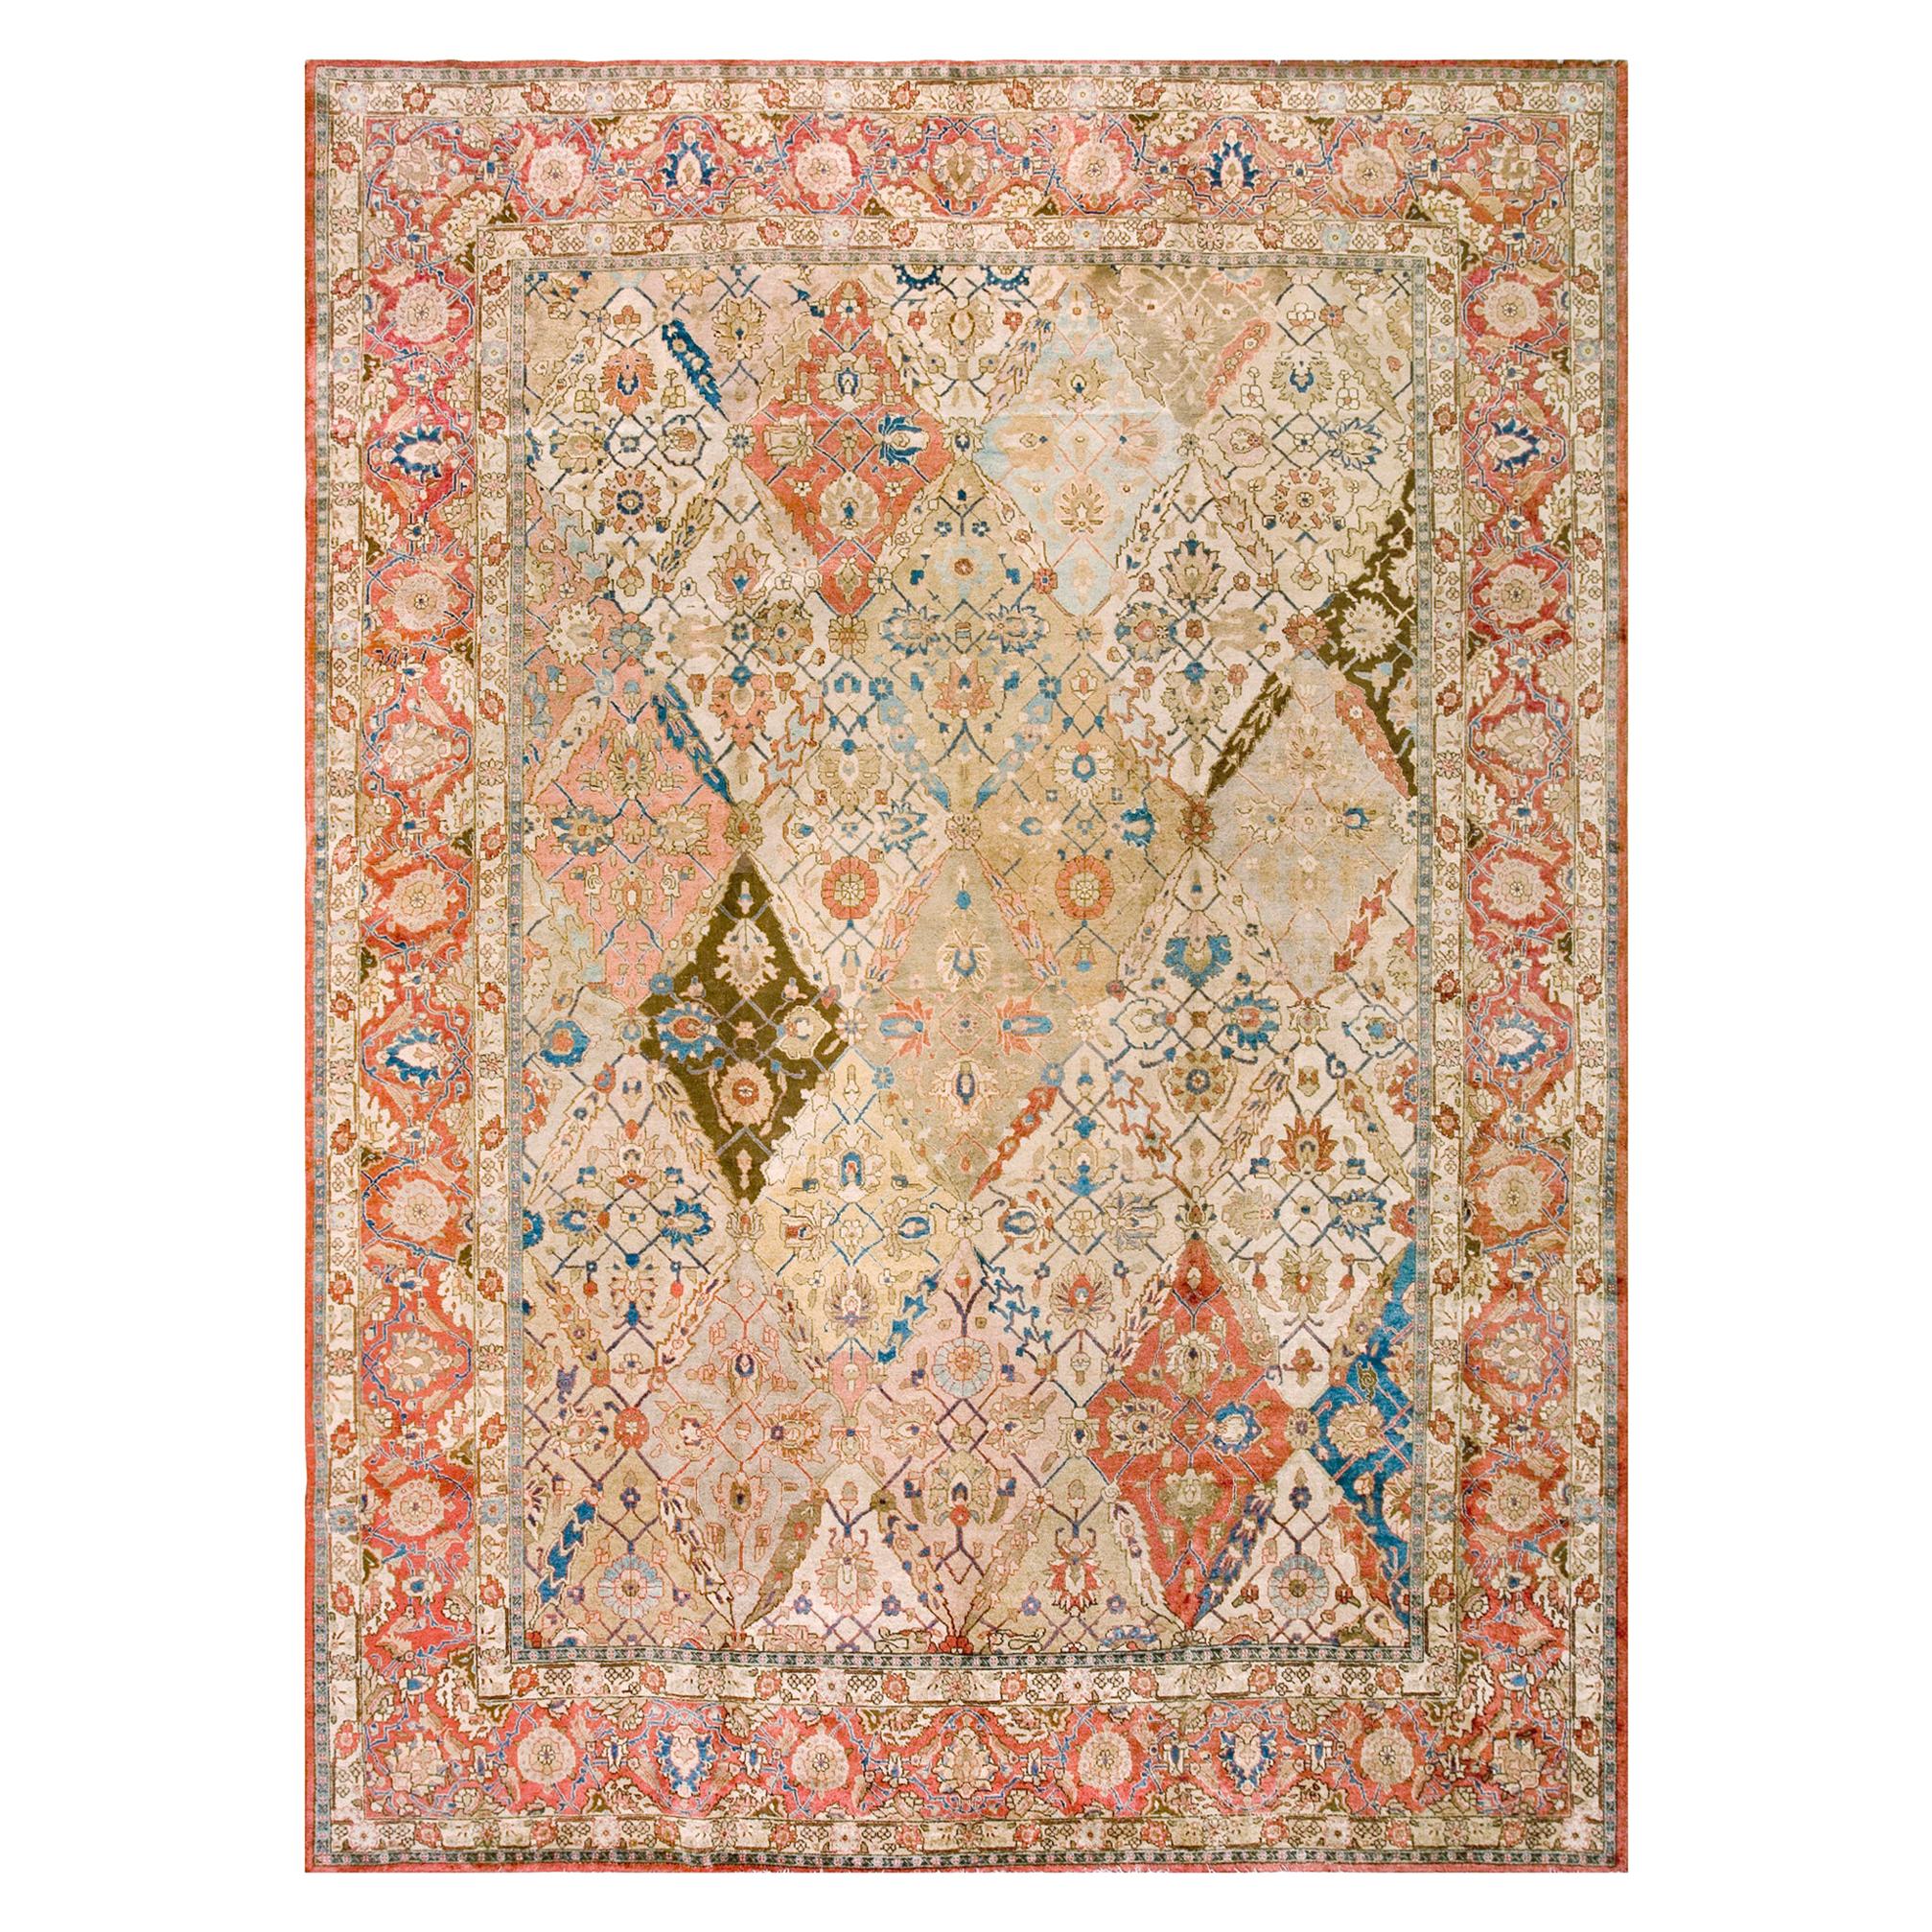 Early 20th Century Persian Tabriz Carpet ( 9'10" x 13'6" - 300 x 412 )